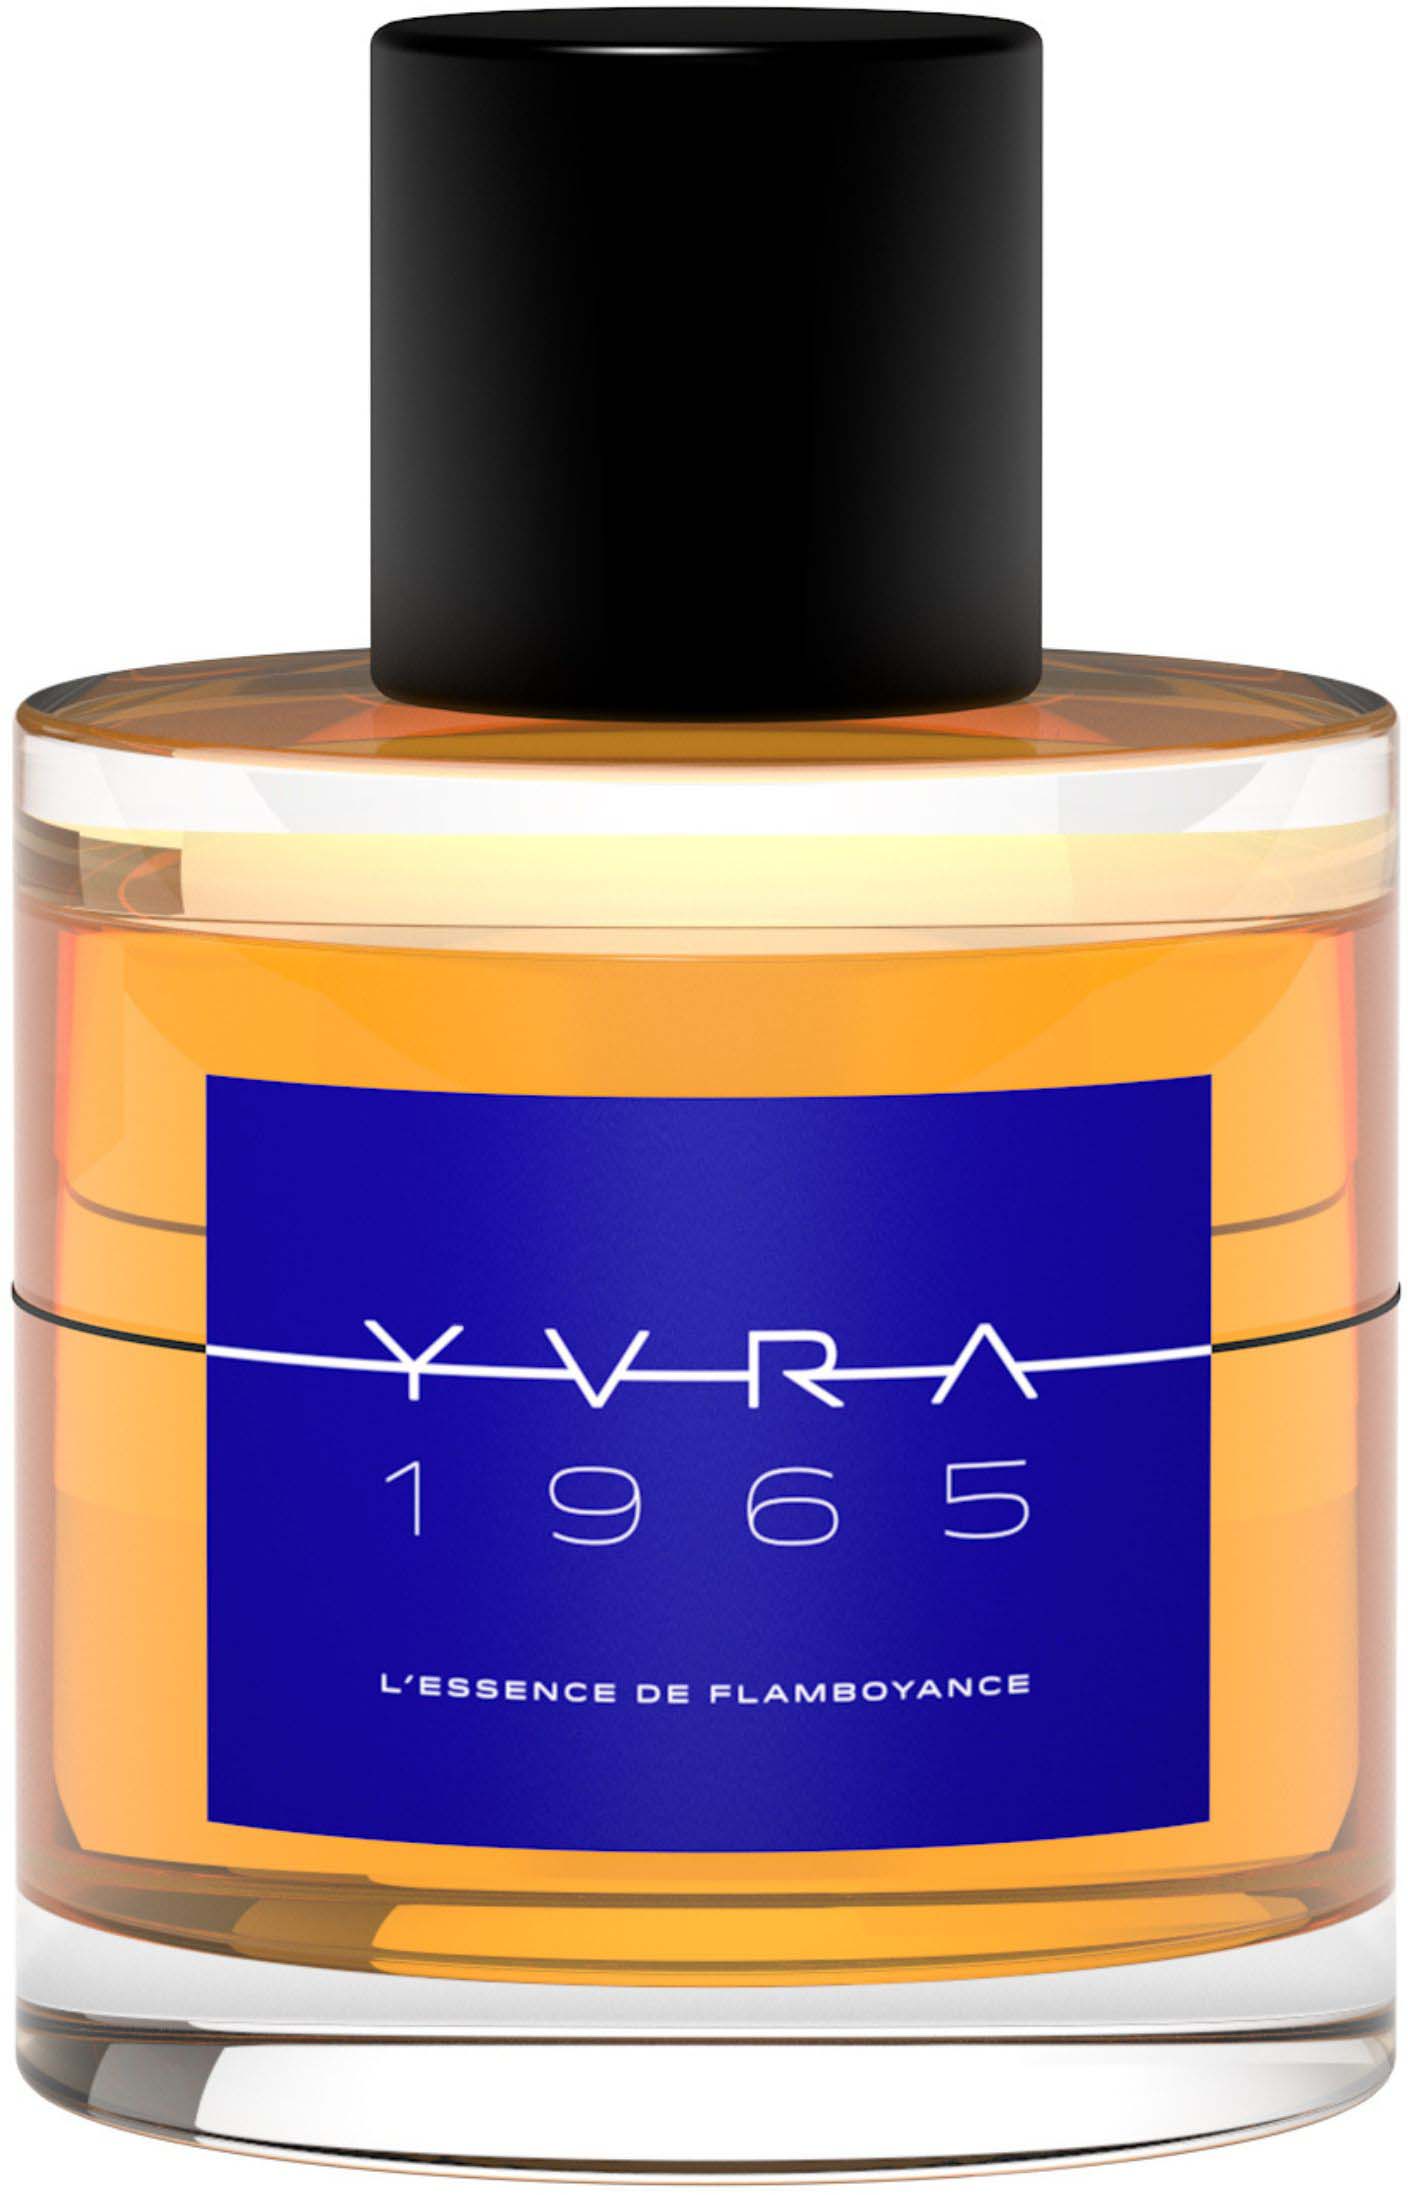 yvra 1965 - l'essence de flamboyance